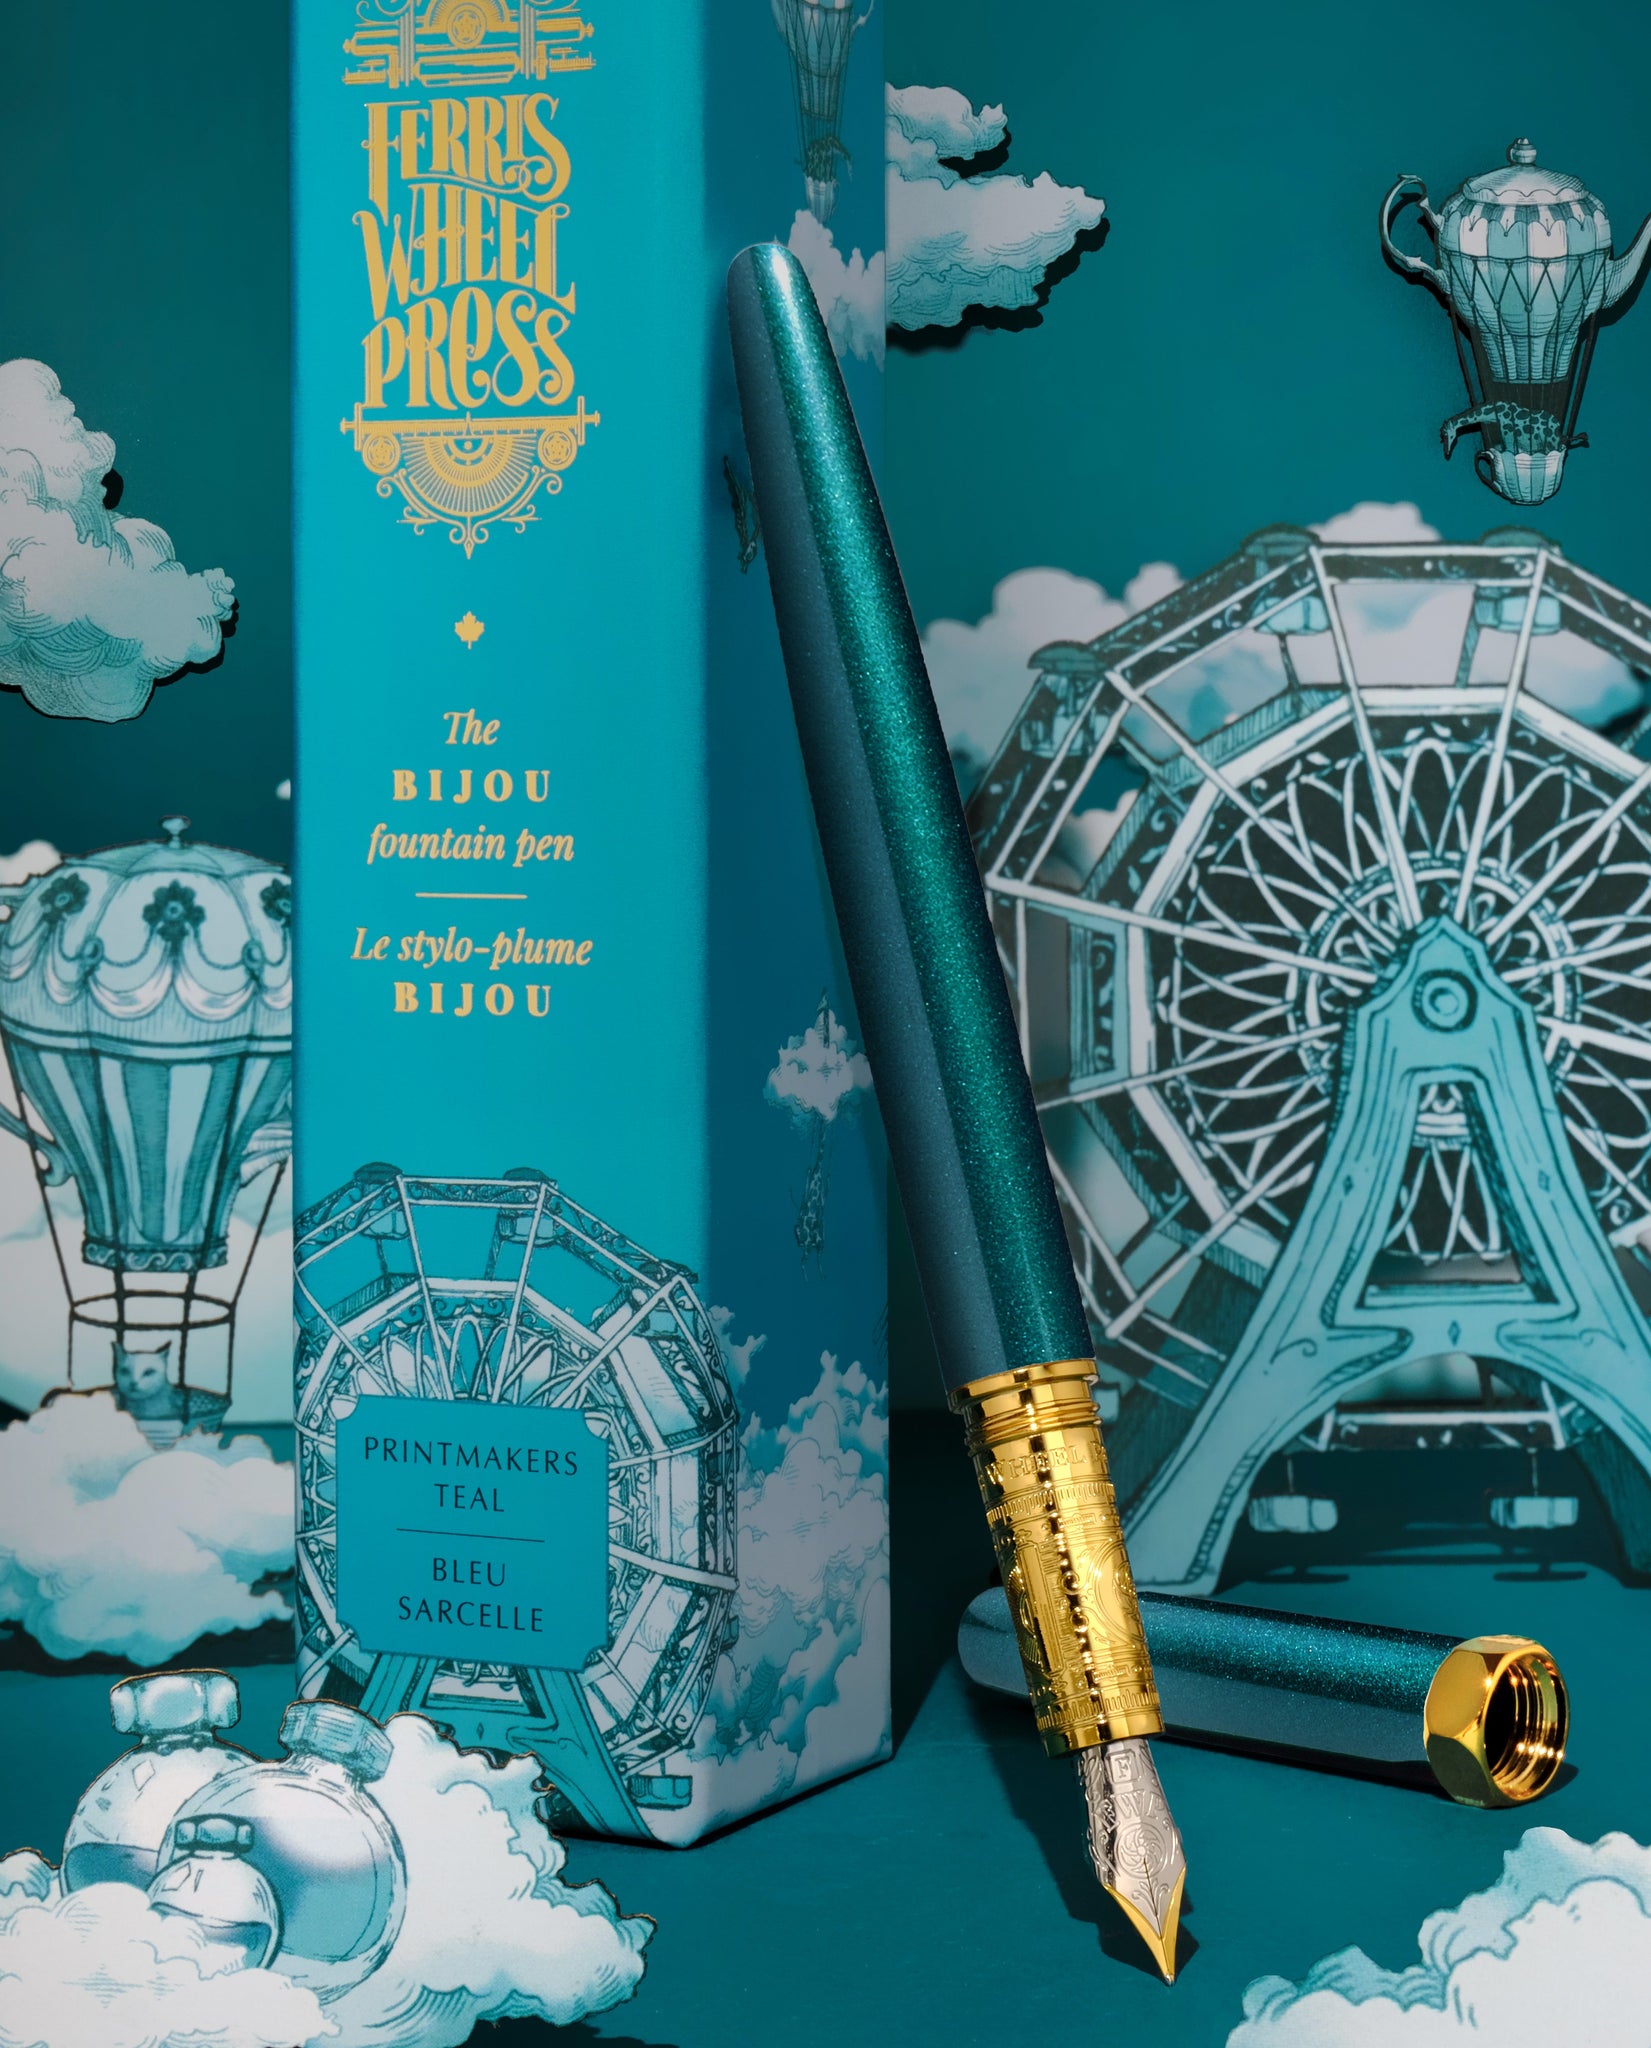 Ferris Wheel Press - The Bijou Fountain Pen (Printmaker's Teal)